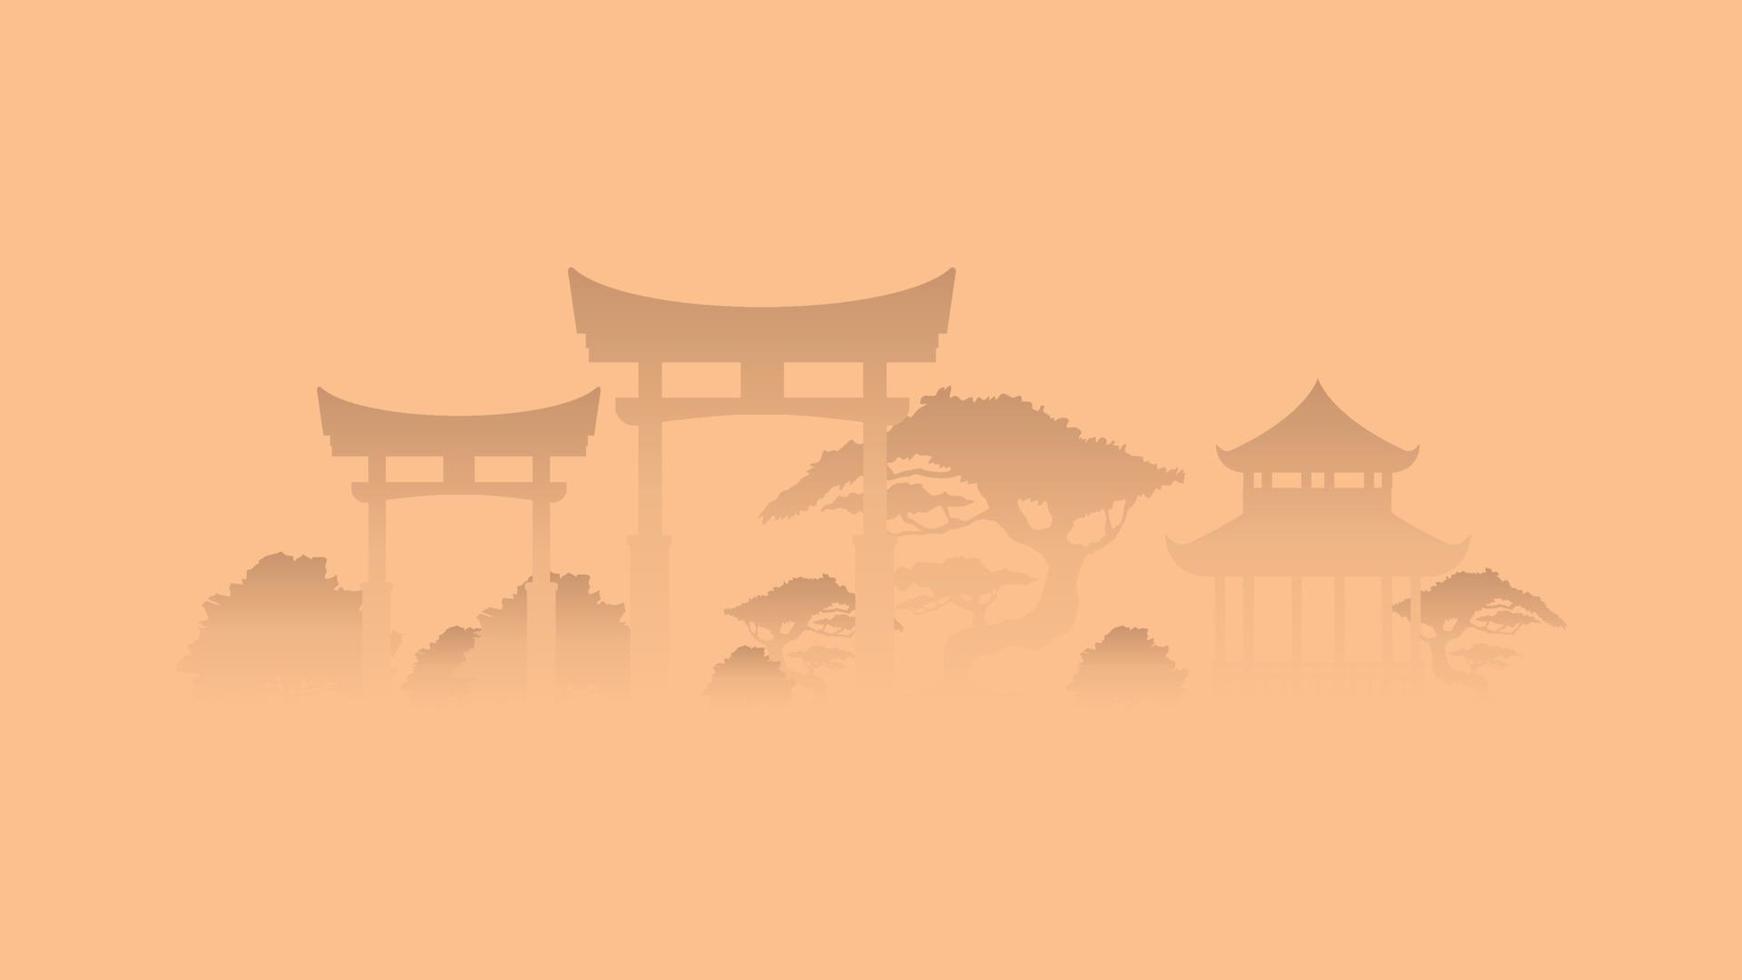 arquitectura asiática en silueta brumosa al amanecer. pancarta horizontal. diseños para carteles, sitios web, postales. vector